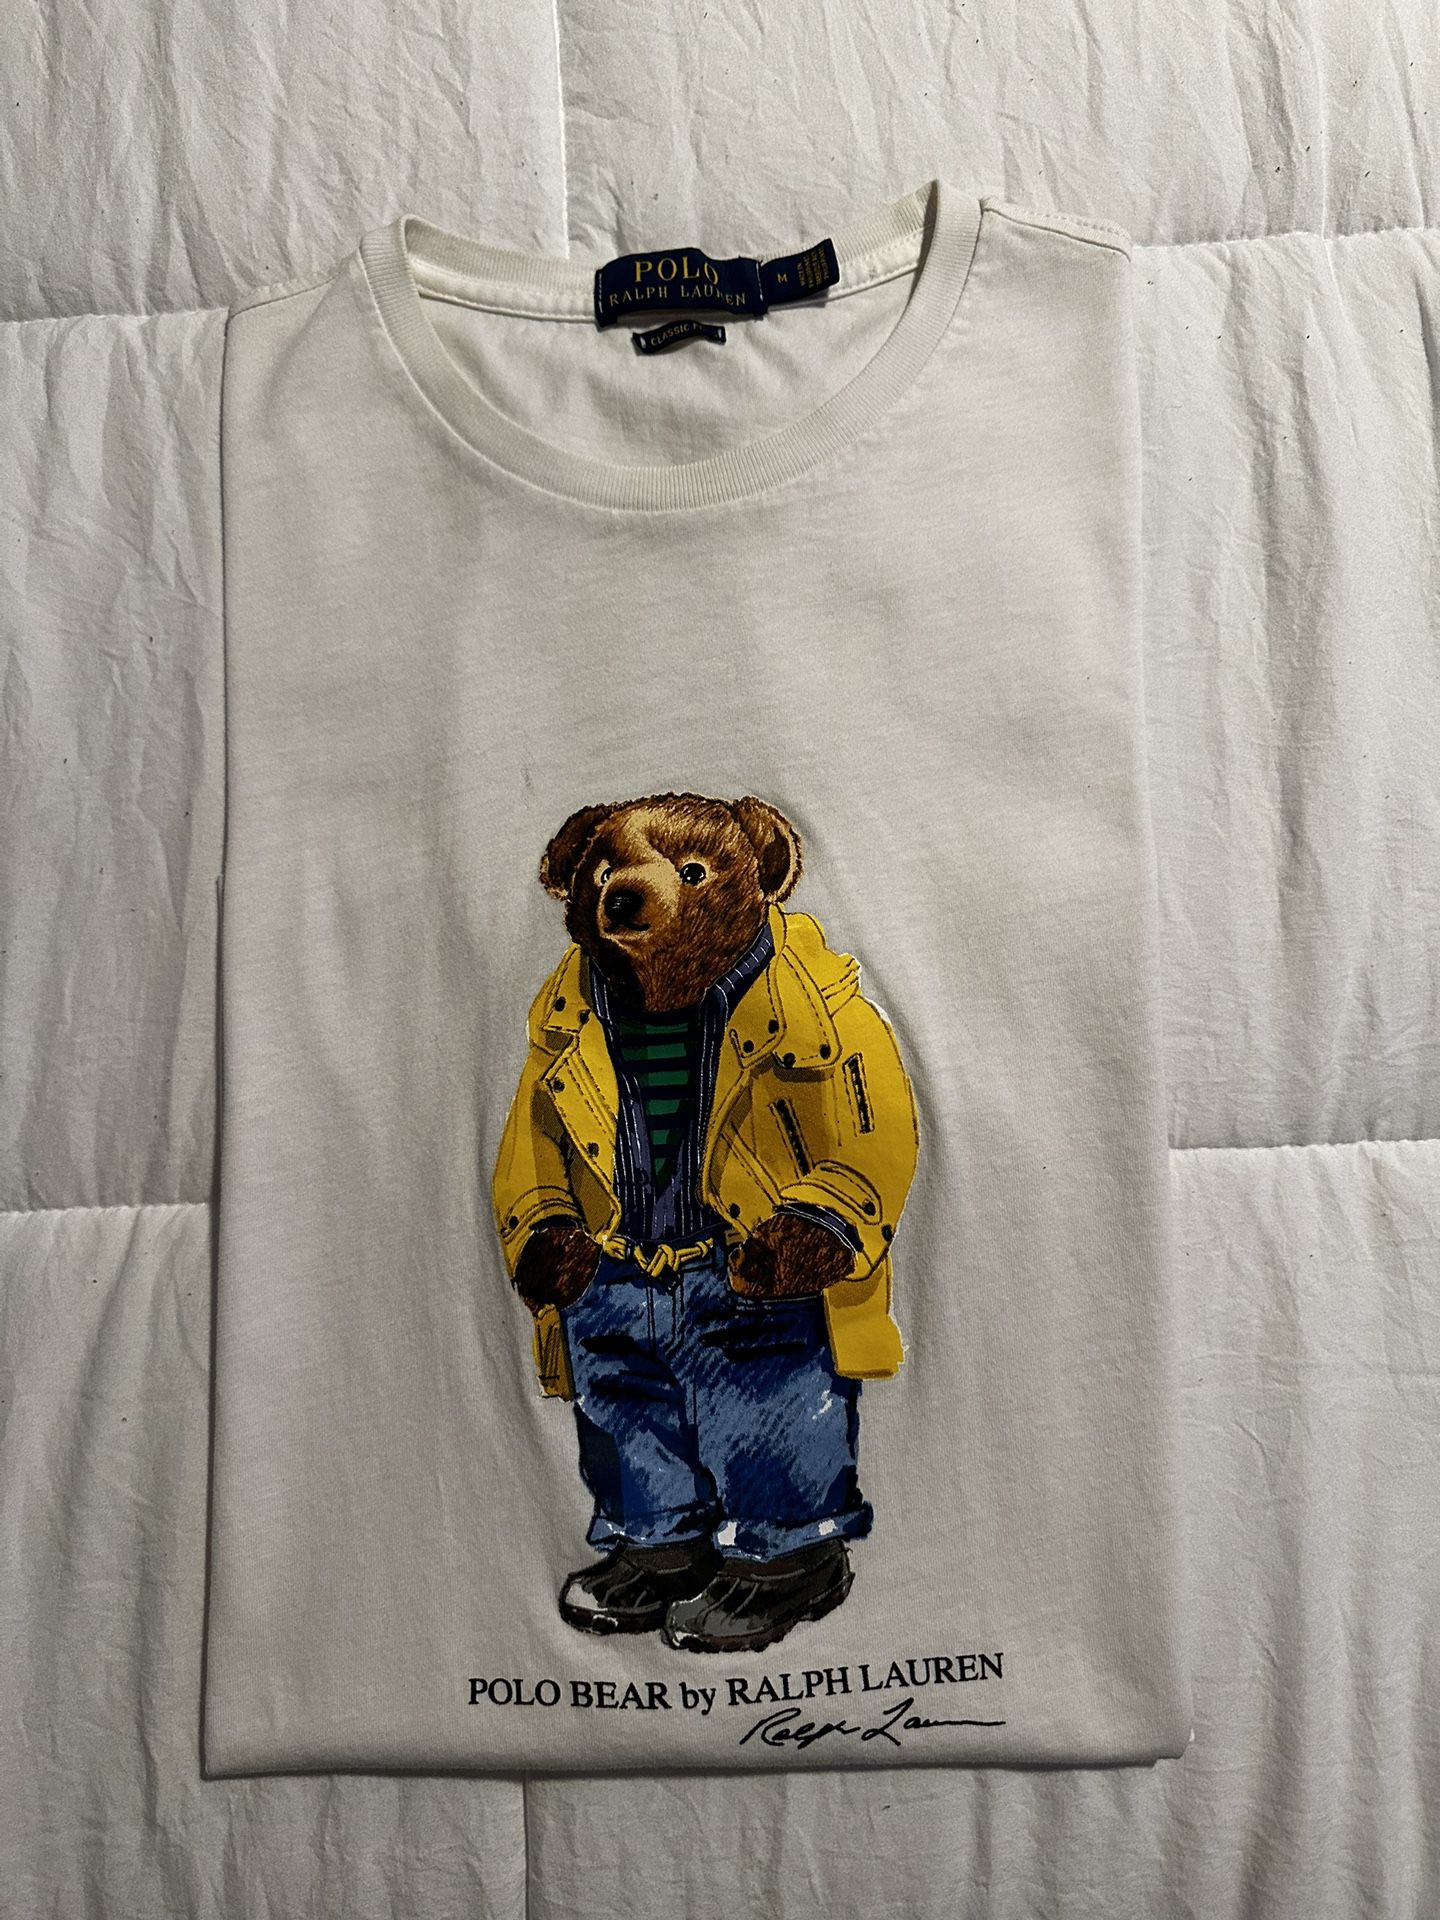 Polo Ralph Lauren White Signature Teddy Bear Yellow Rain Coat Jeans Tee T-Shirt